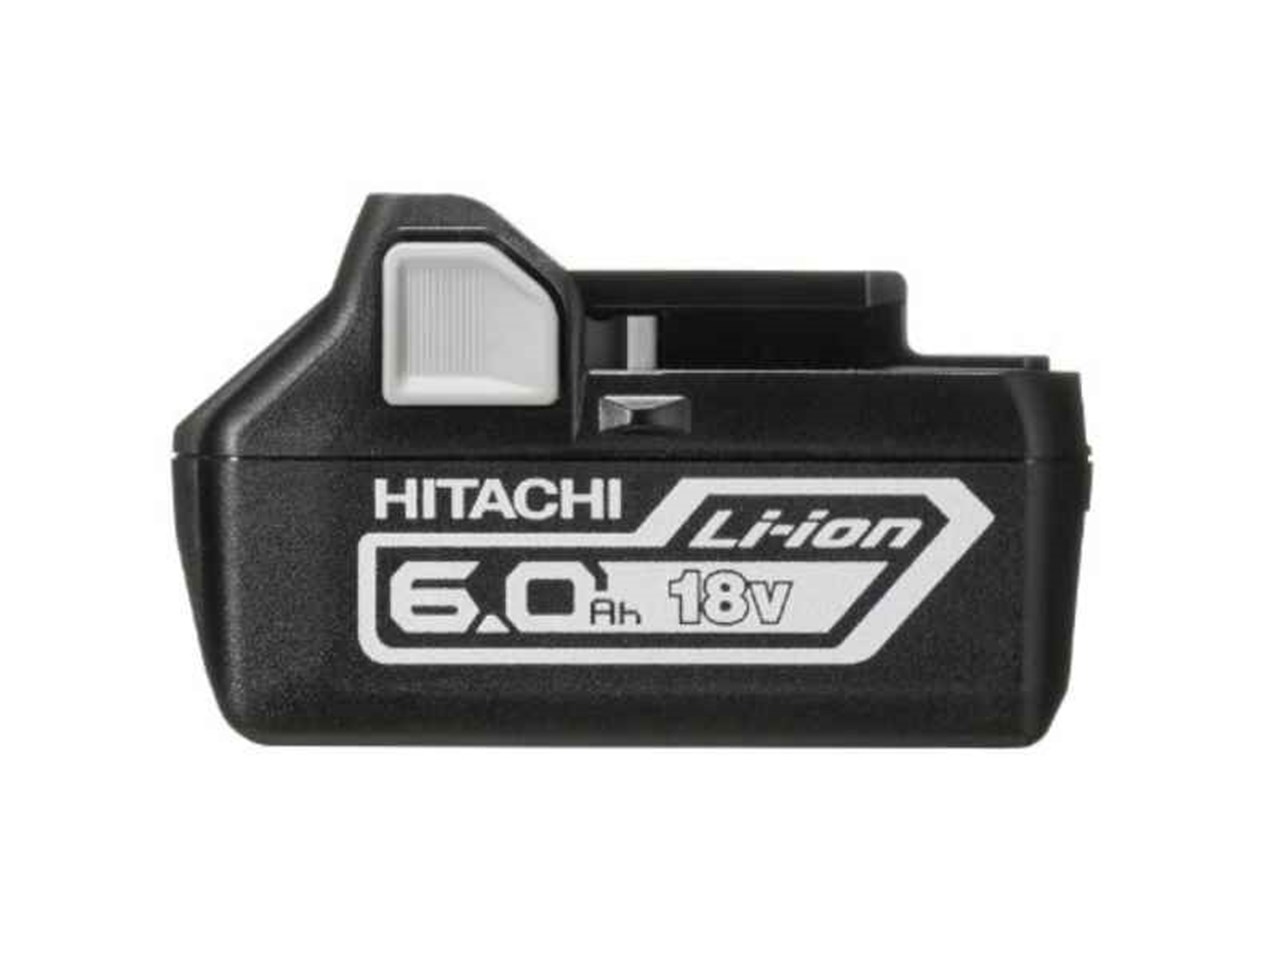 Hitachi BSL1860 18V 6.0Ah Li-Ion Battery